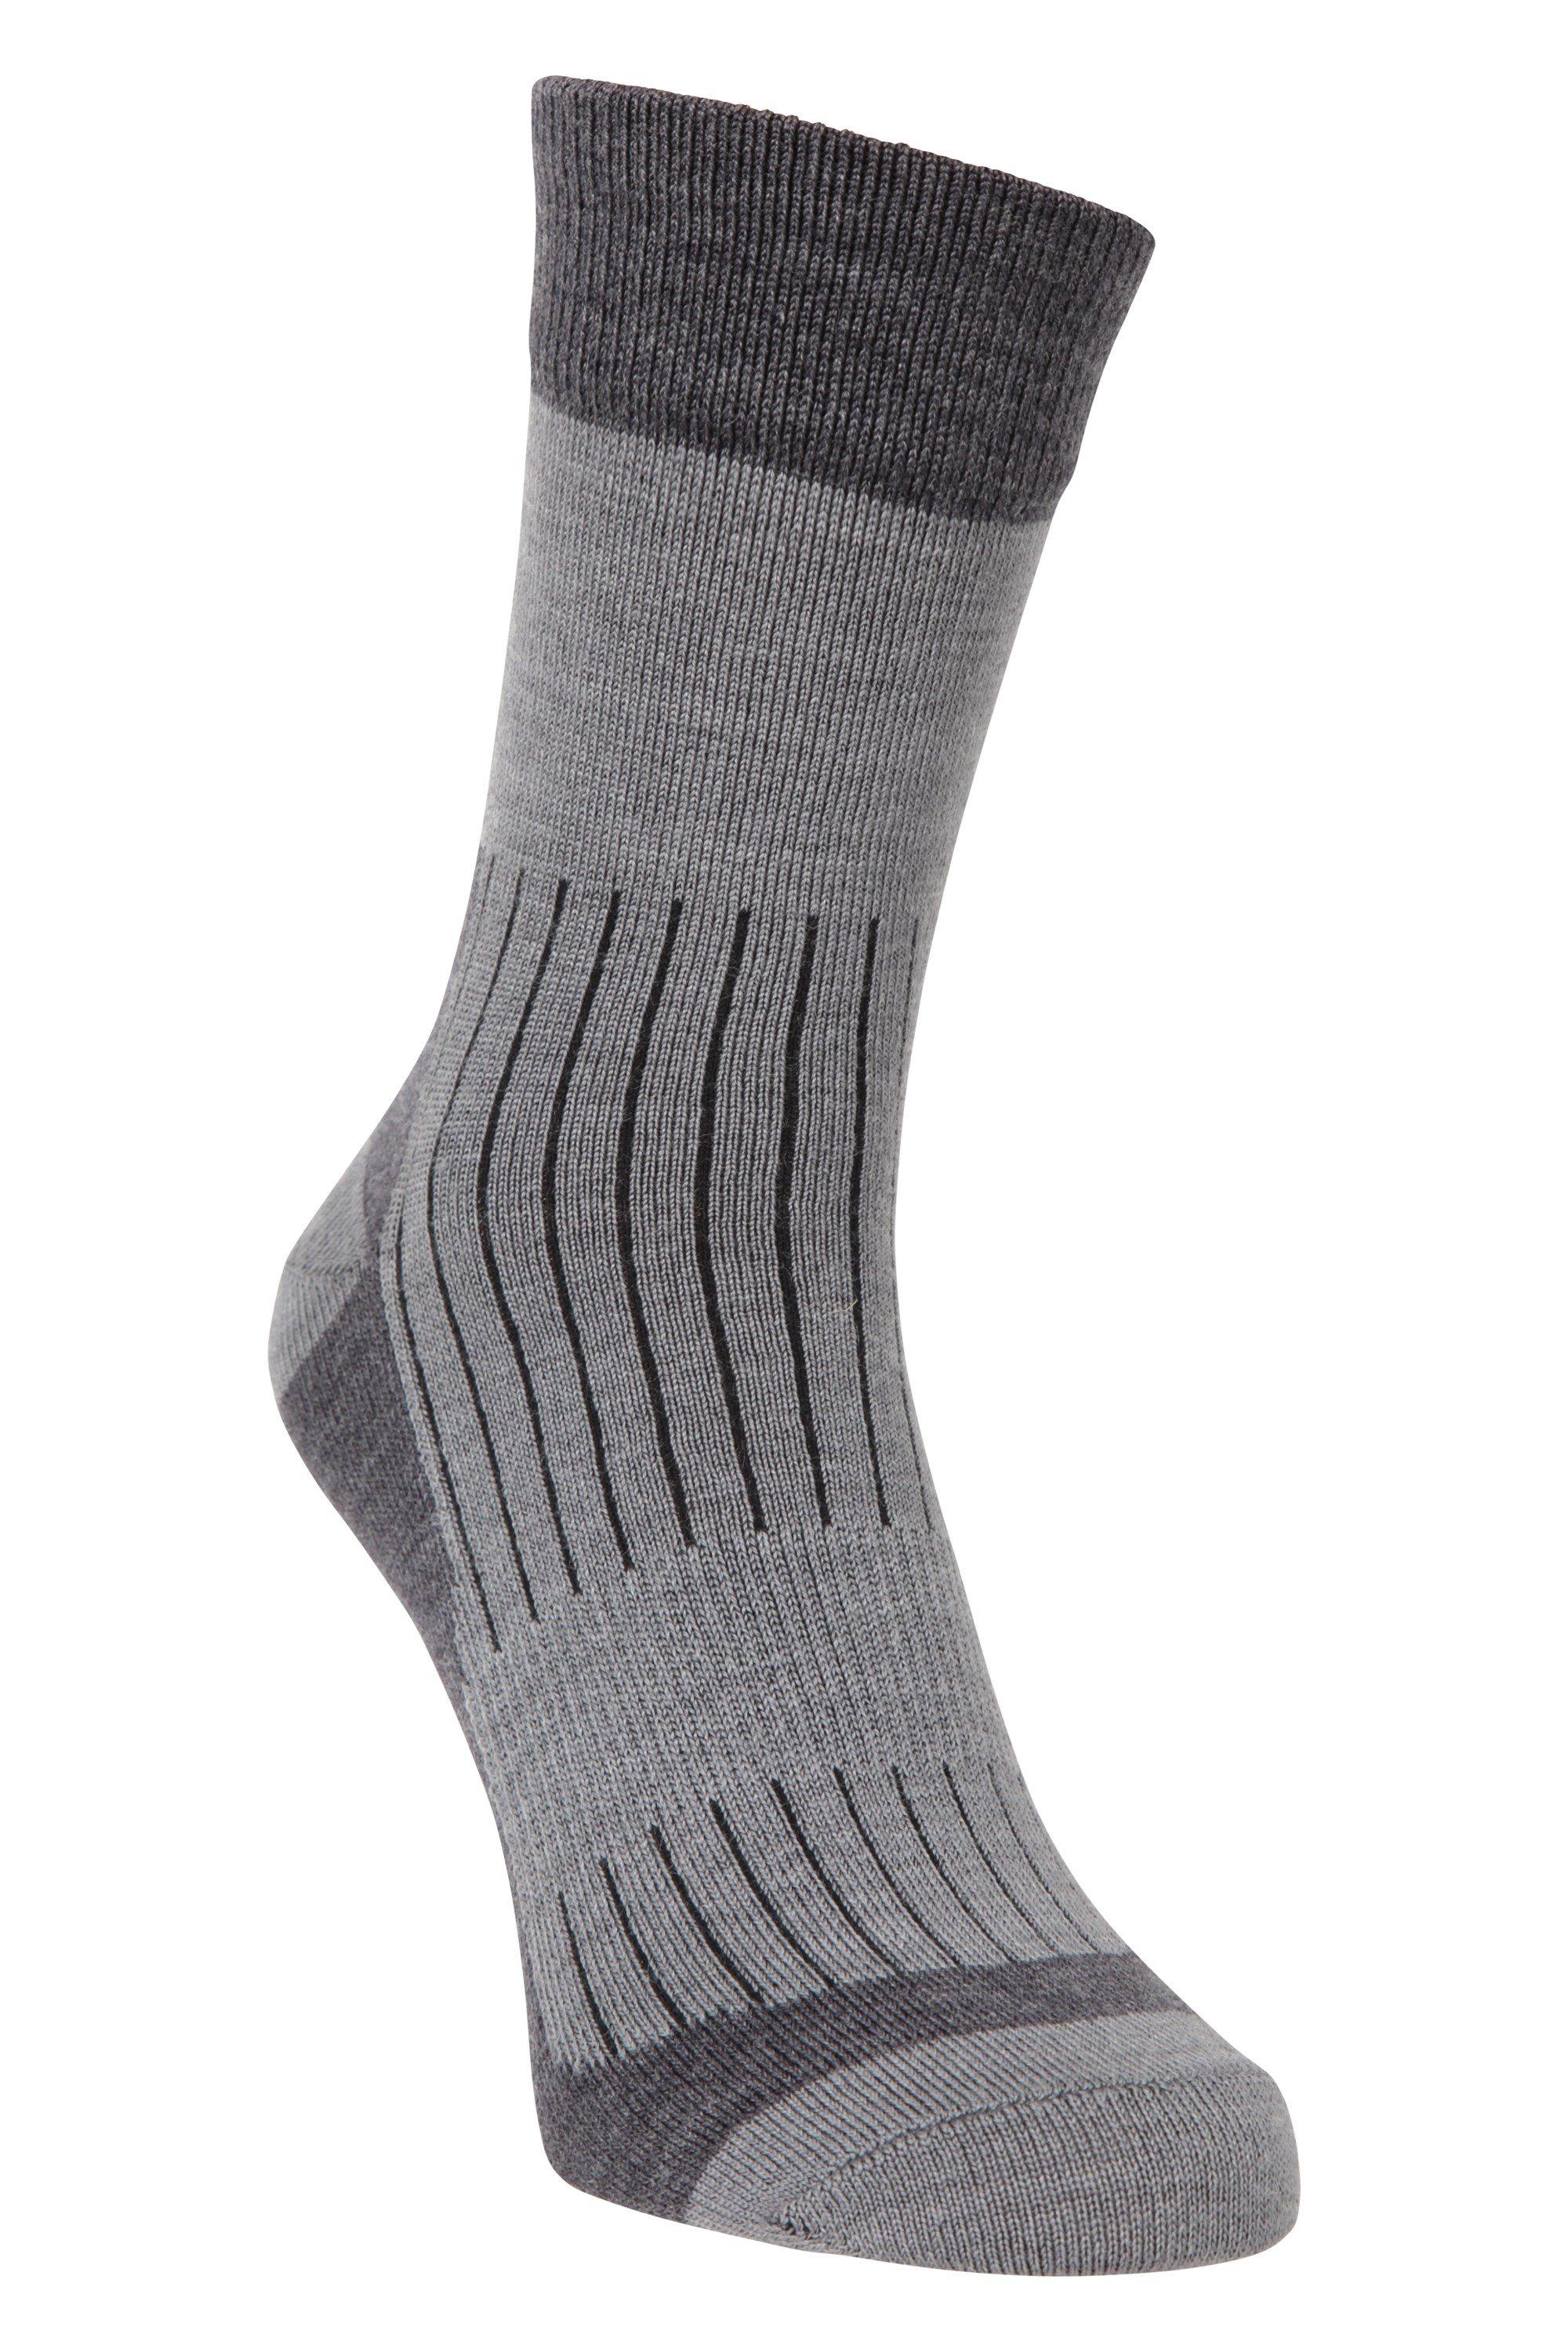 Merino Mid Calf Socks Lightweight, Durable & Breathable